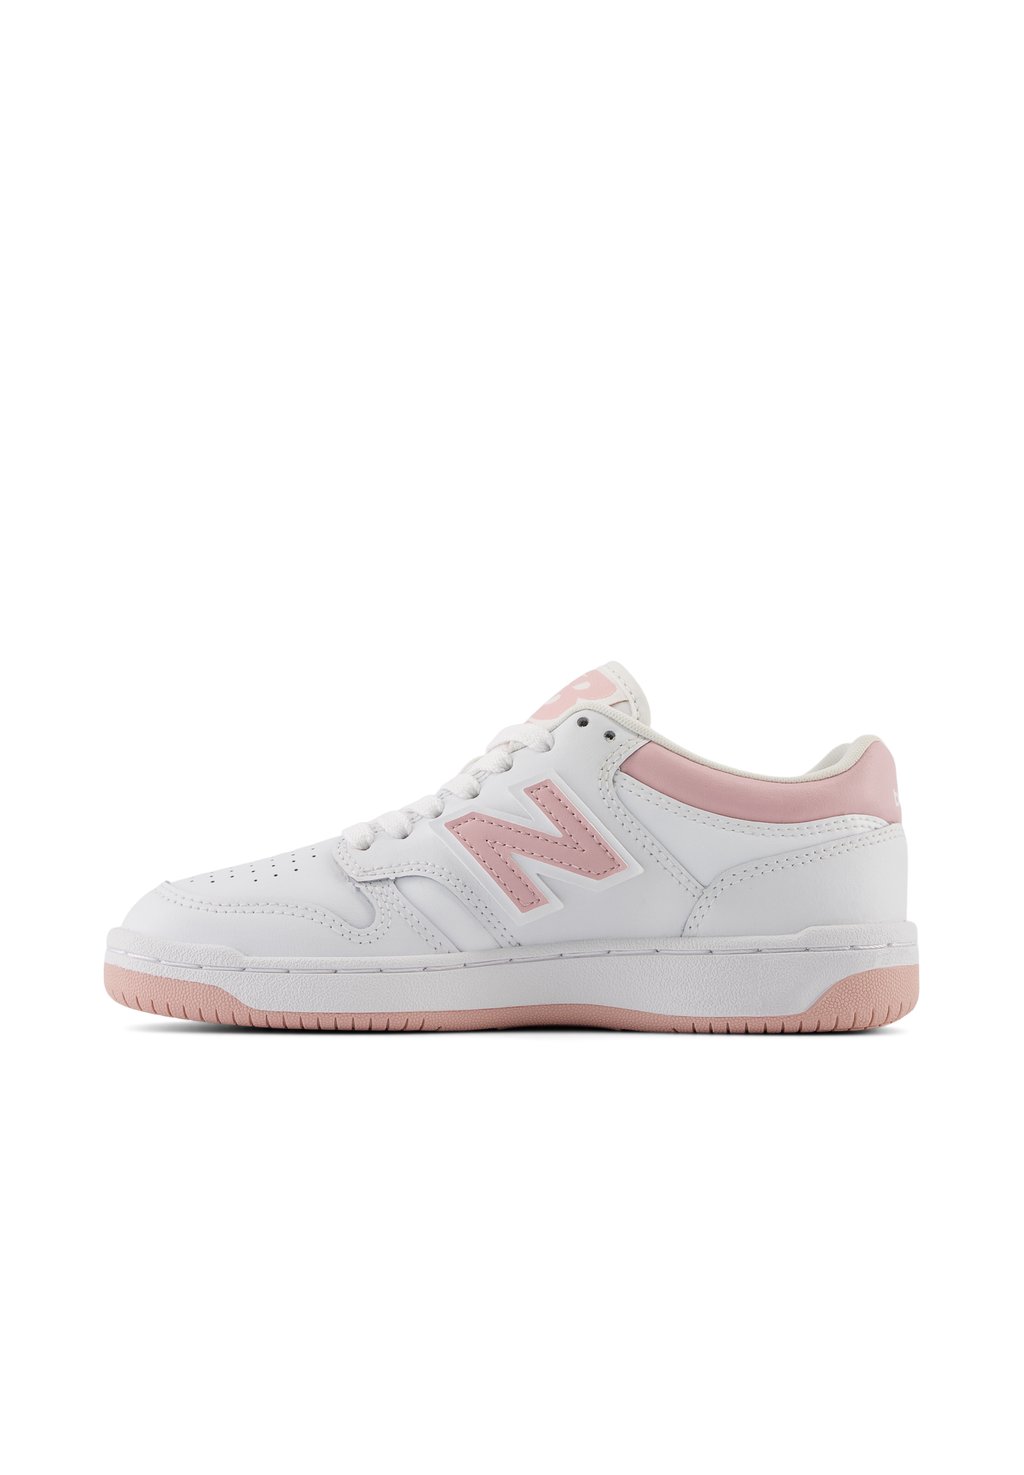 Кроссовки низкие 480 UNISEX New Balance, цвет white pink